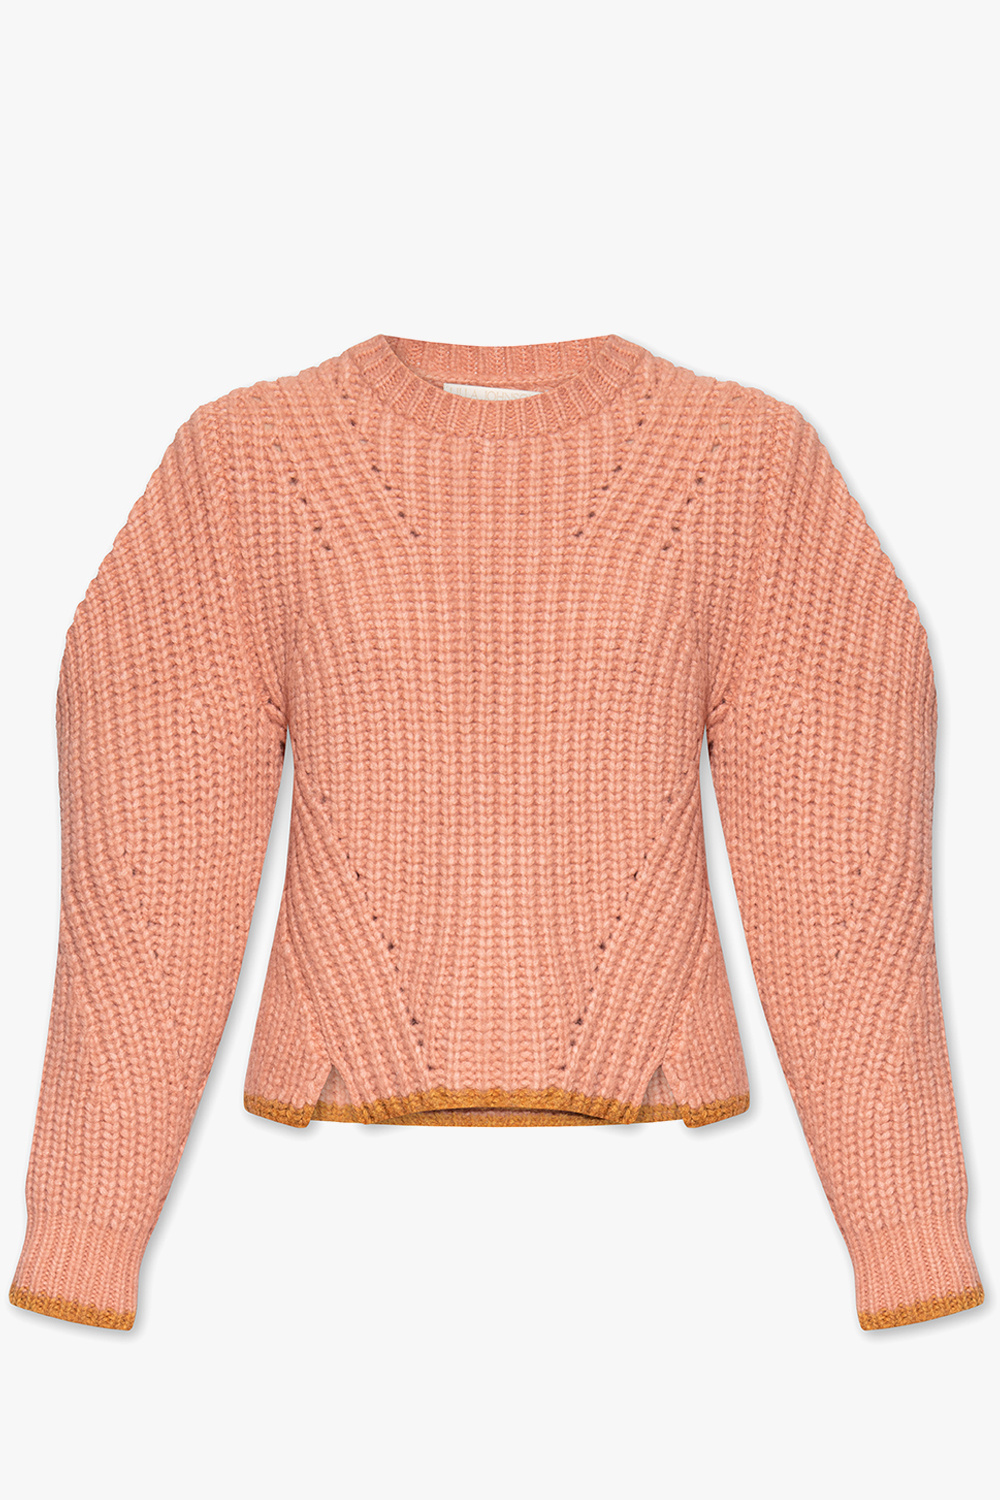 loffler elastic jacket mens - \'Lorena\' Ulla Johnson CamaragrancanariaShops - WF Pink sweater